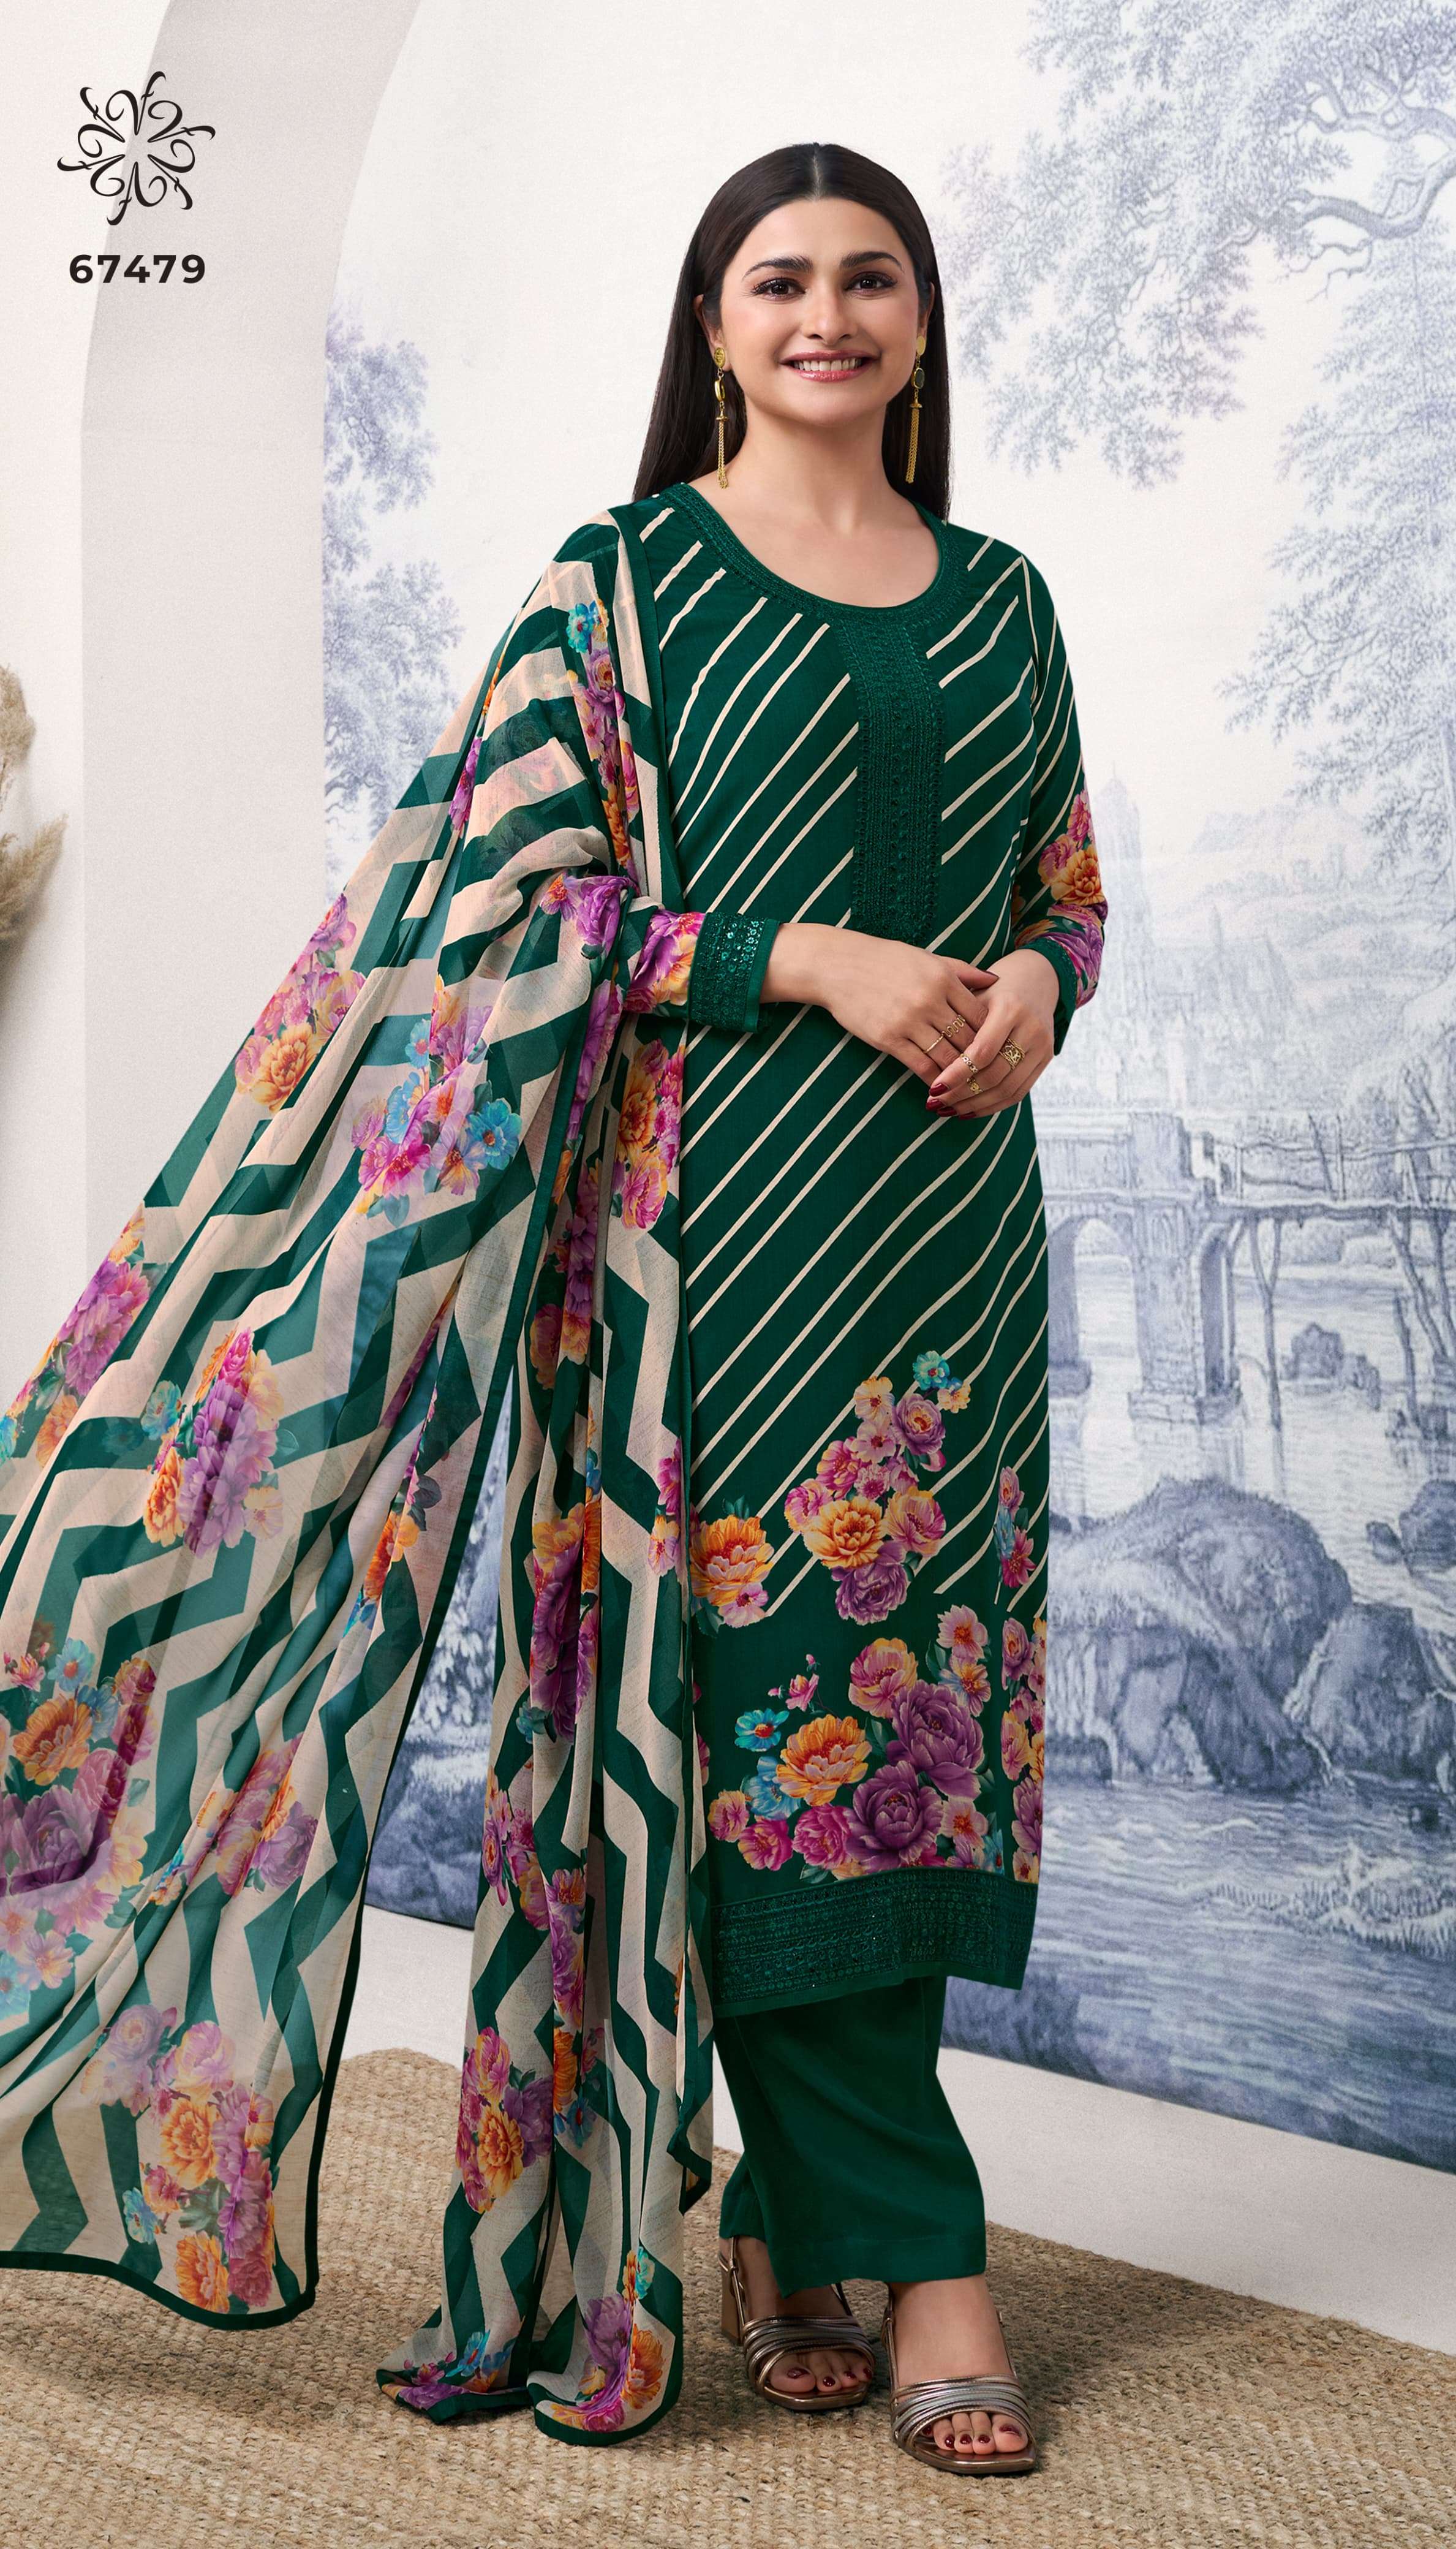 vinay fashion silkina royal crape 44 embroidery royal crape gorgeous look salwar suit catalog